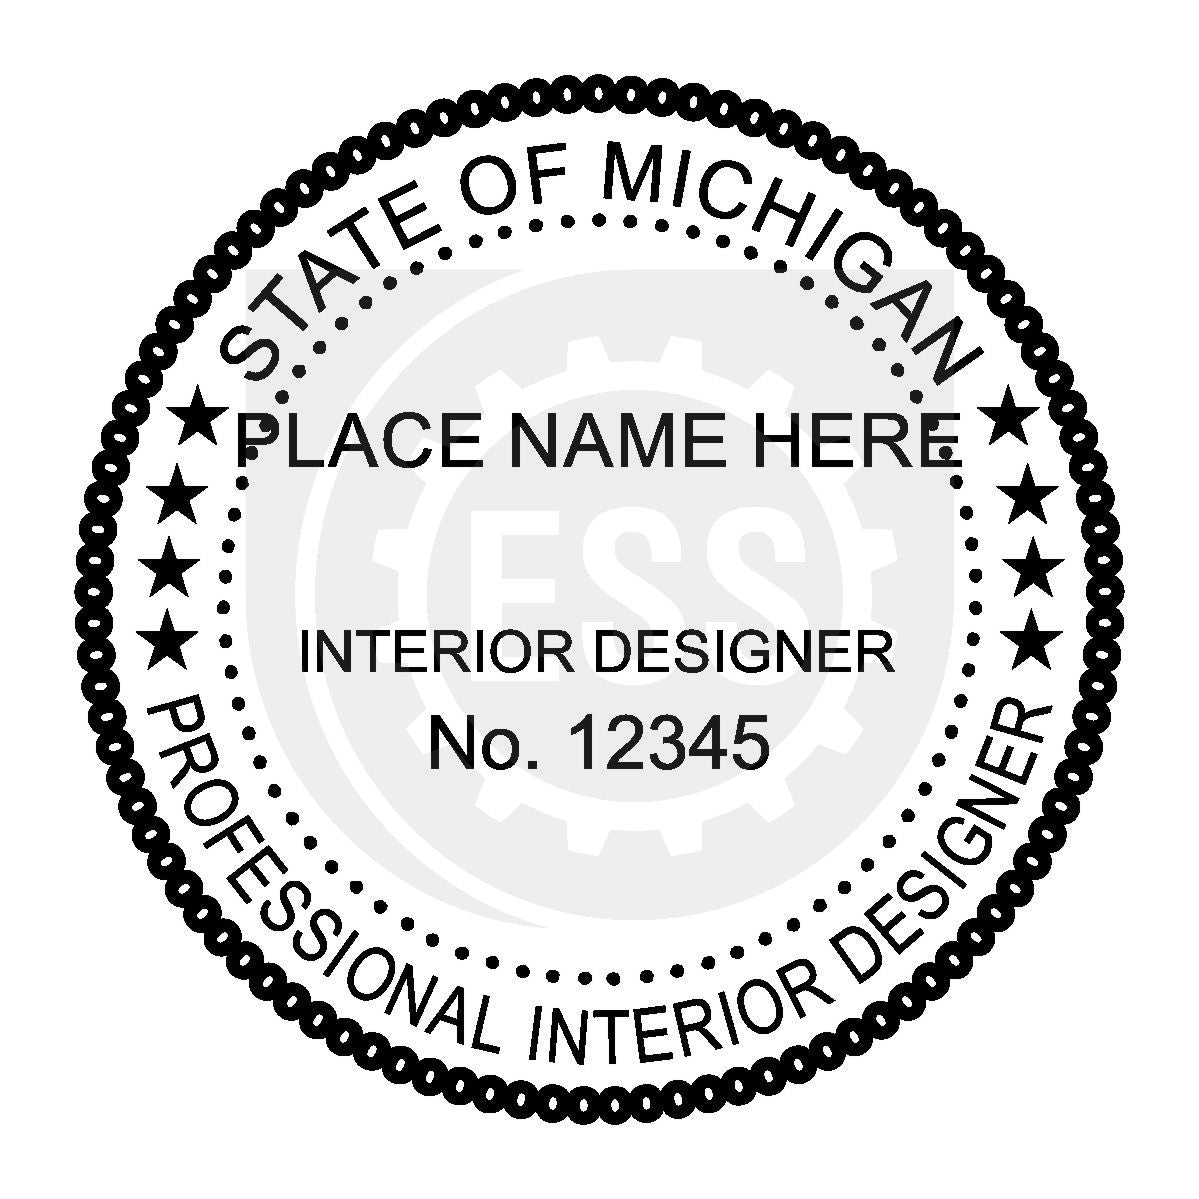 Michigan Interior Designer Seal Setup